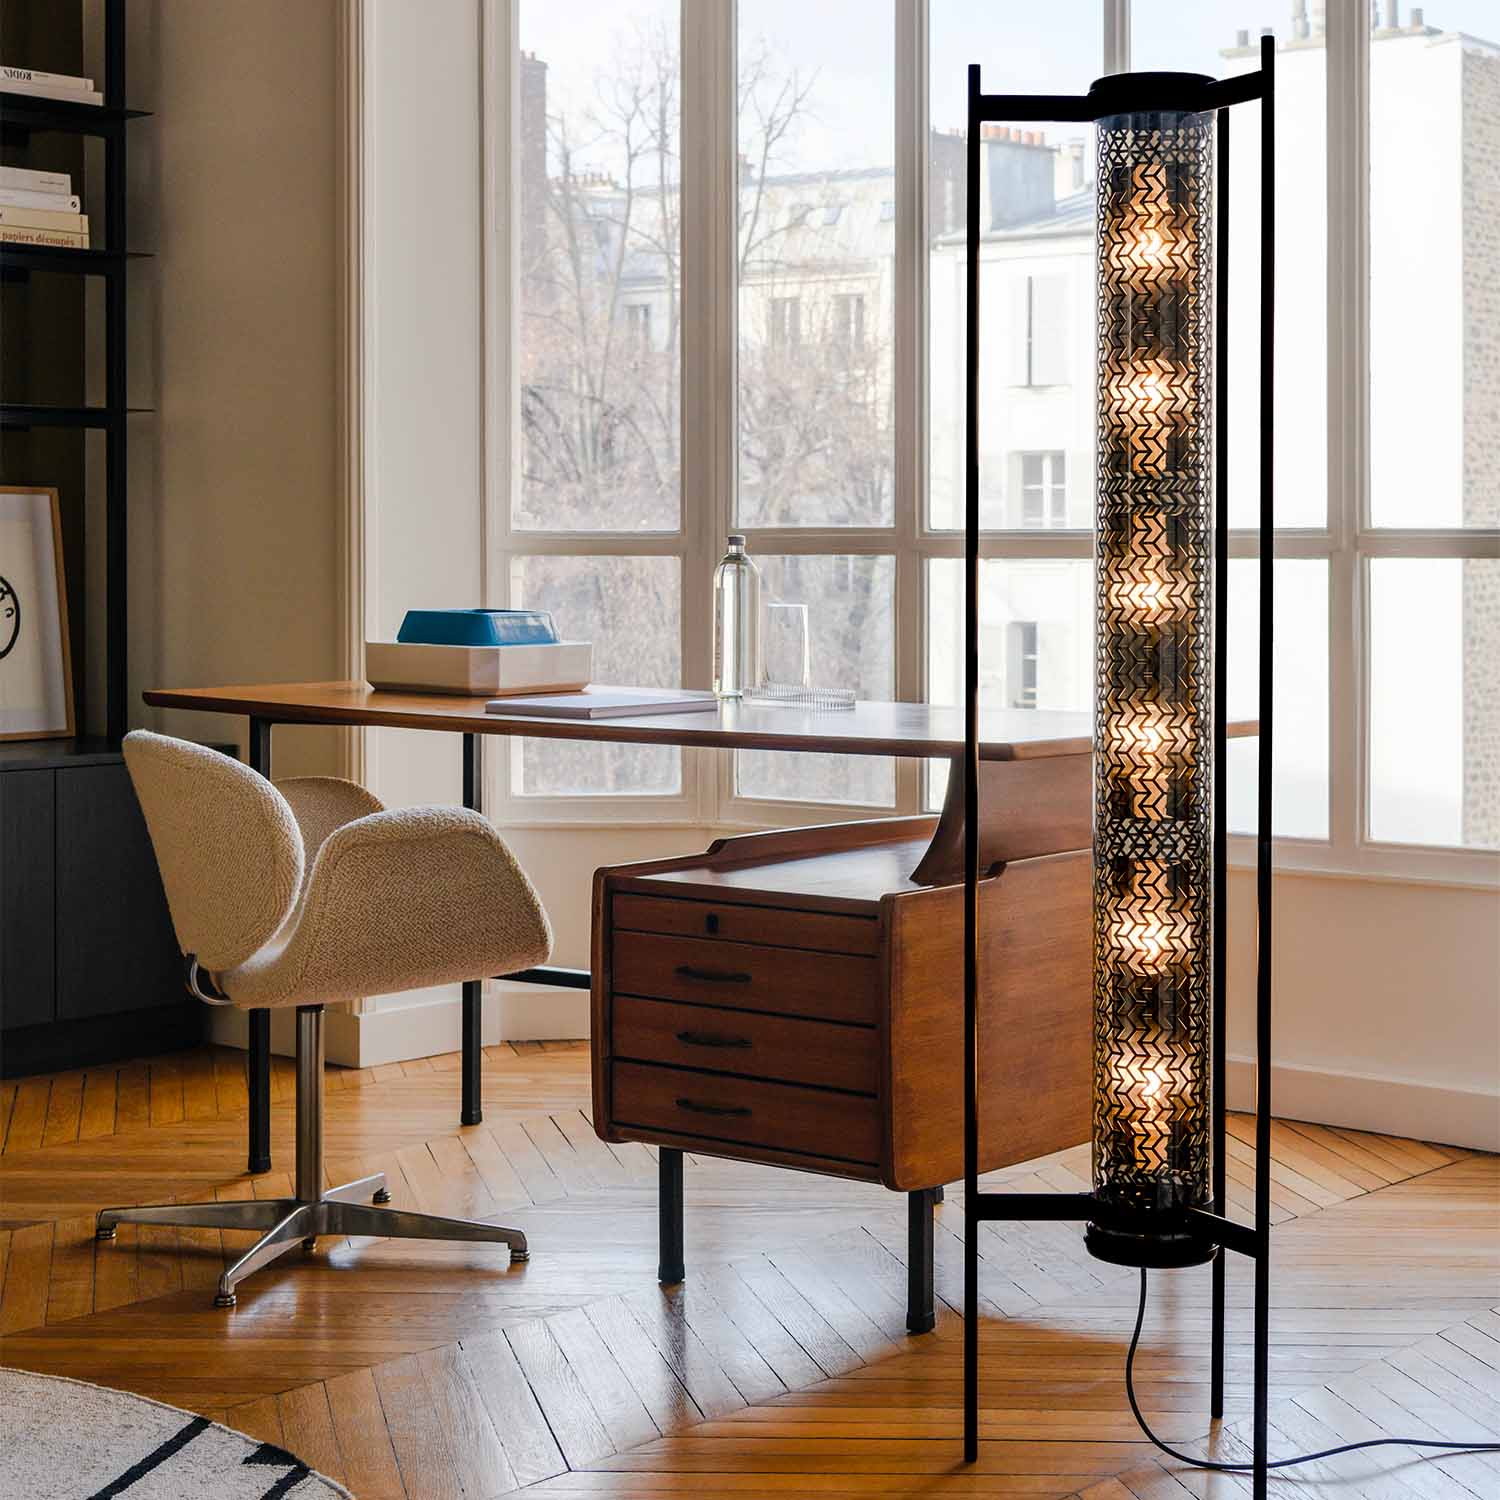 MONCEAU - Designer glass tube floor lamp for living room